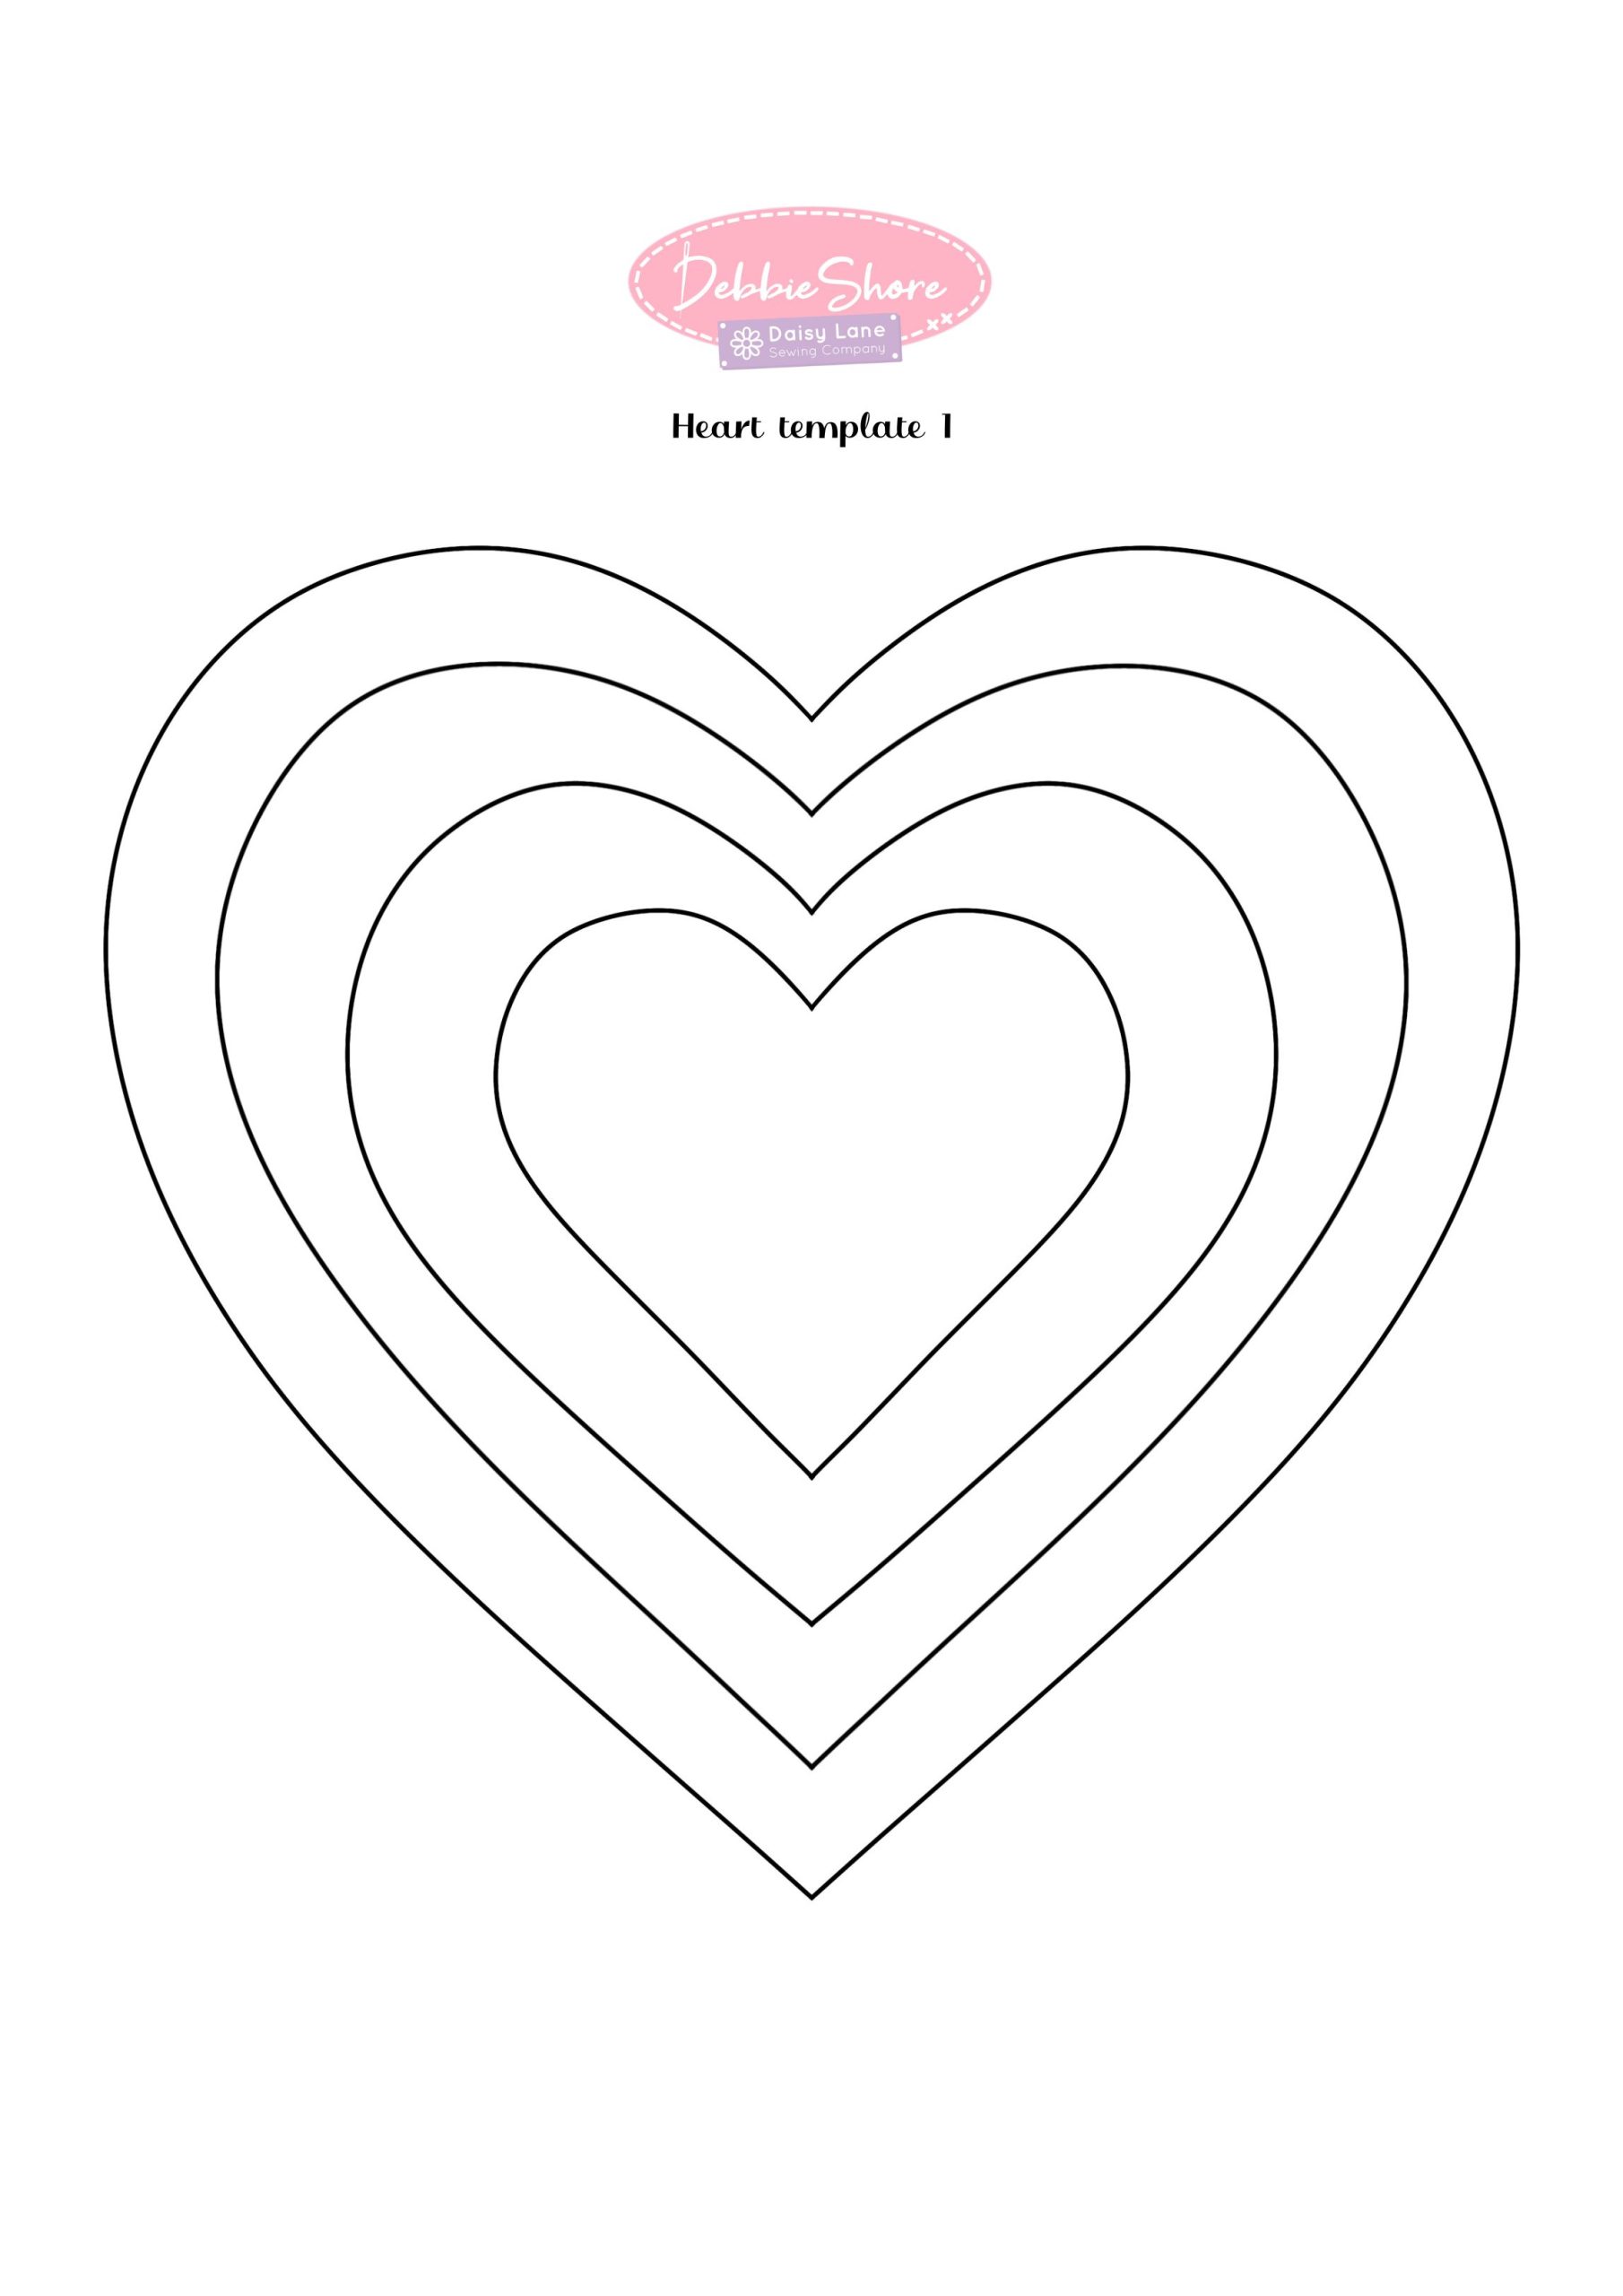 FREE Heart Shape Template Download - 2 Styles – Debbie Shore Sewing